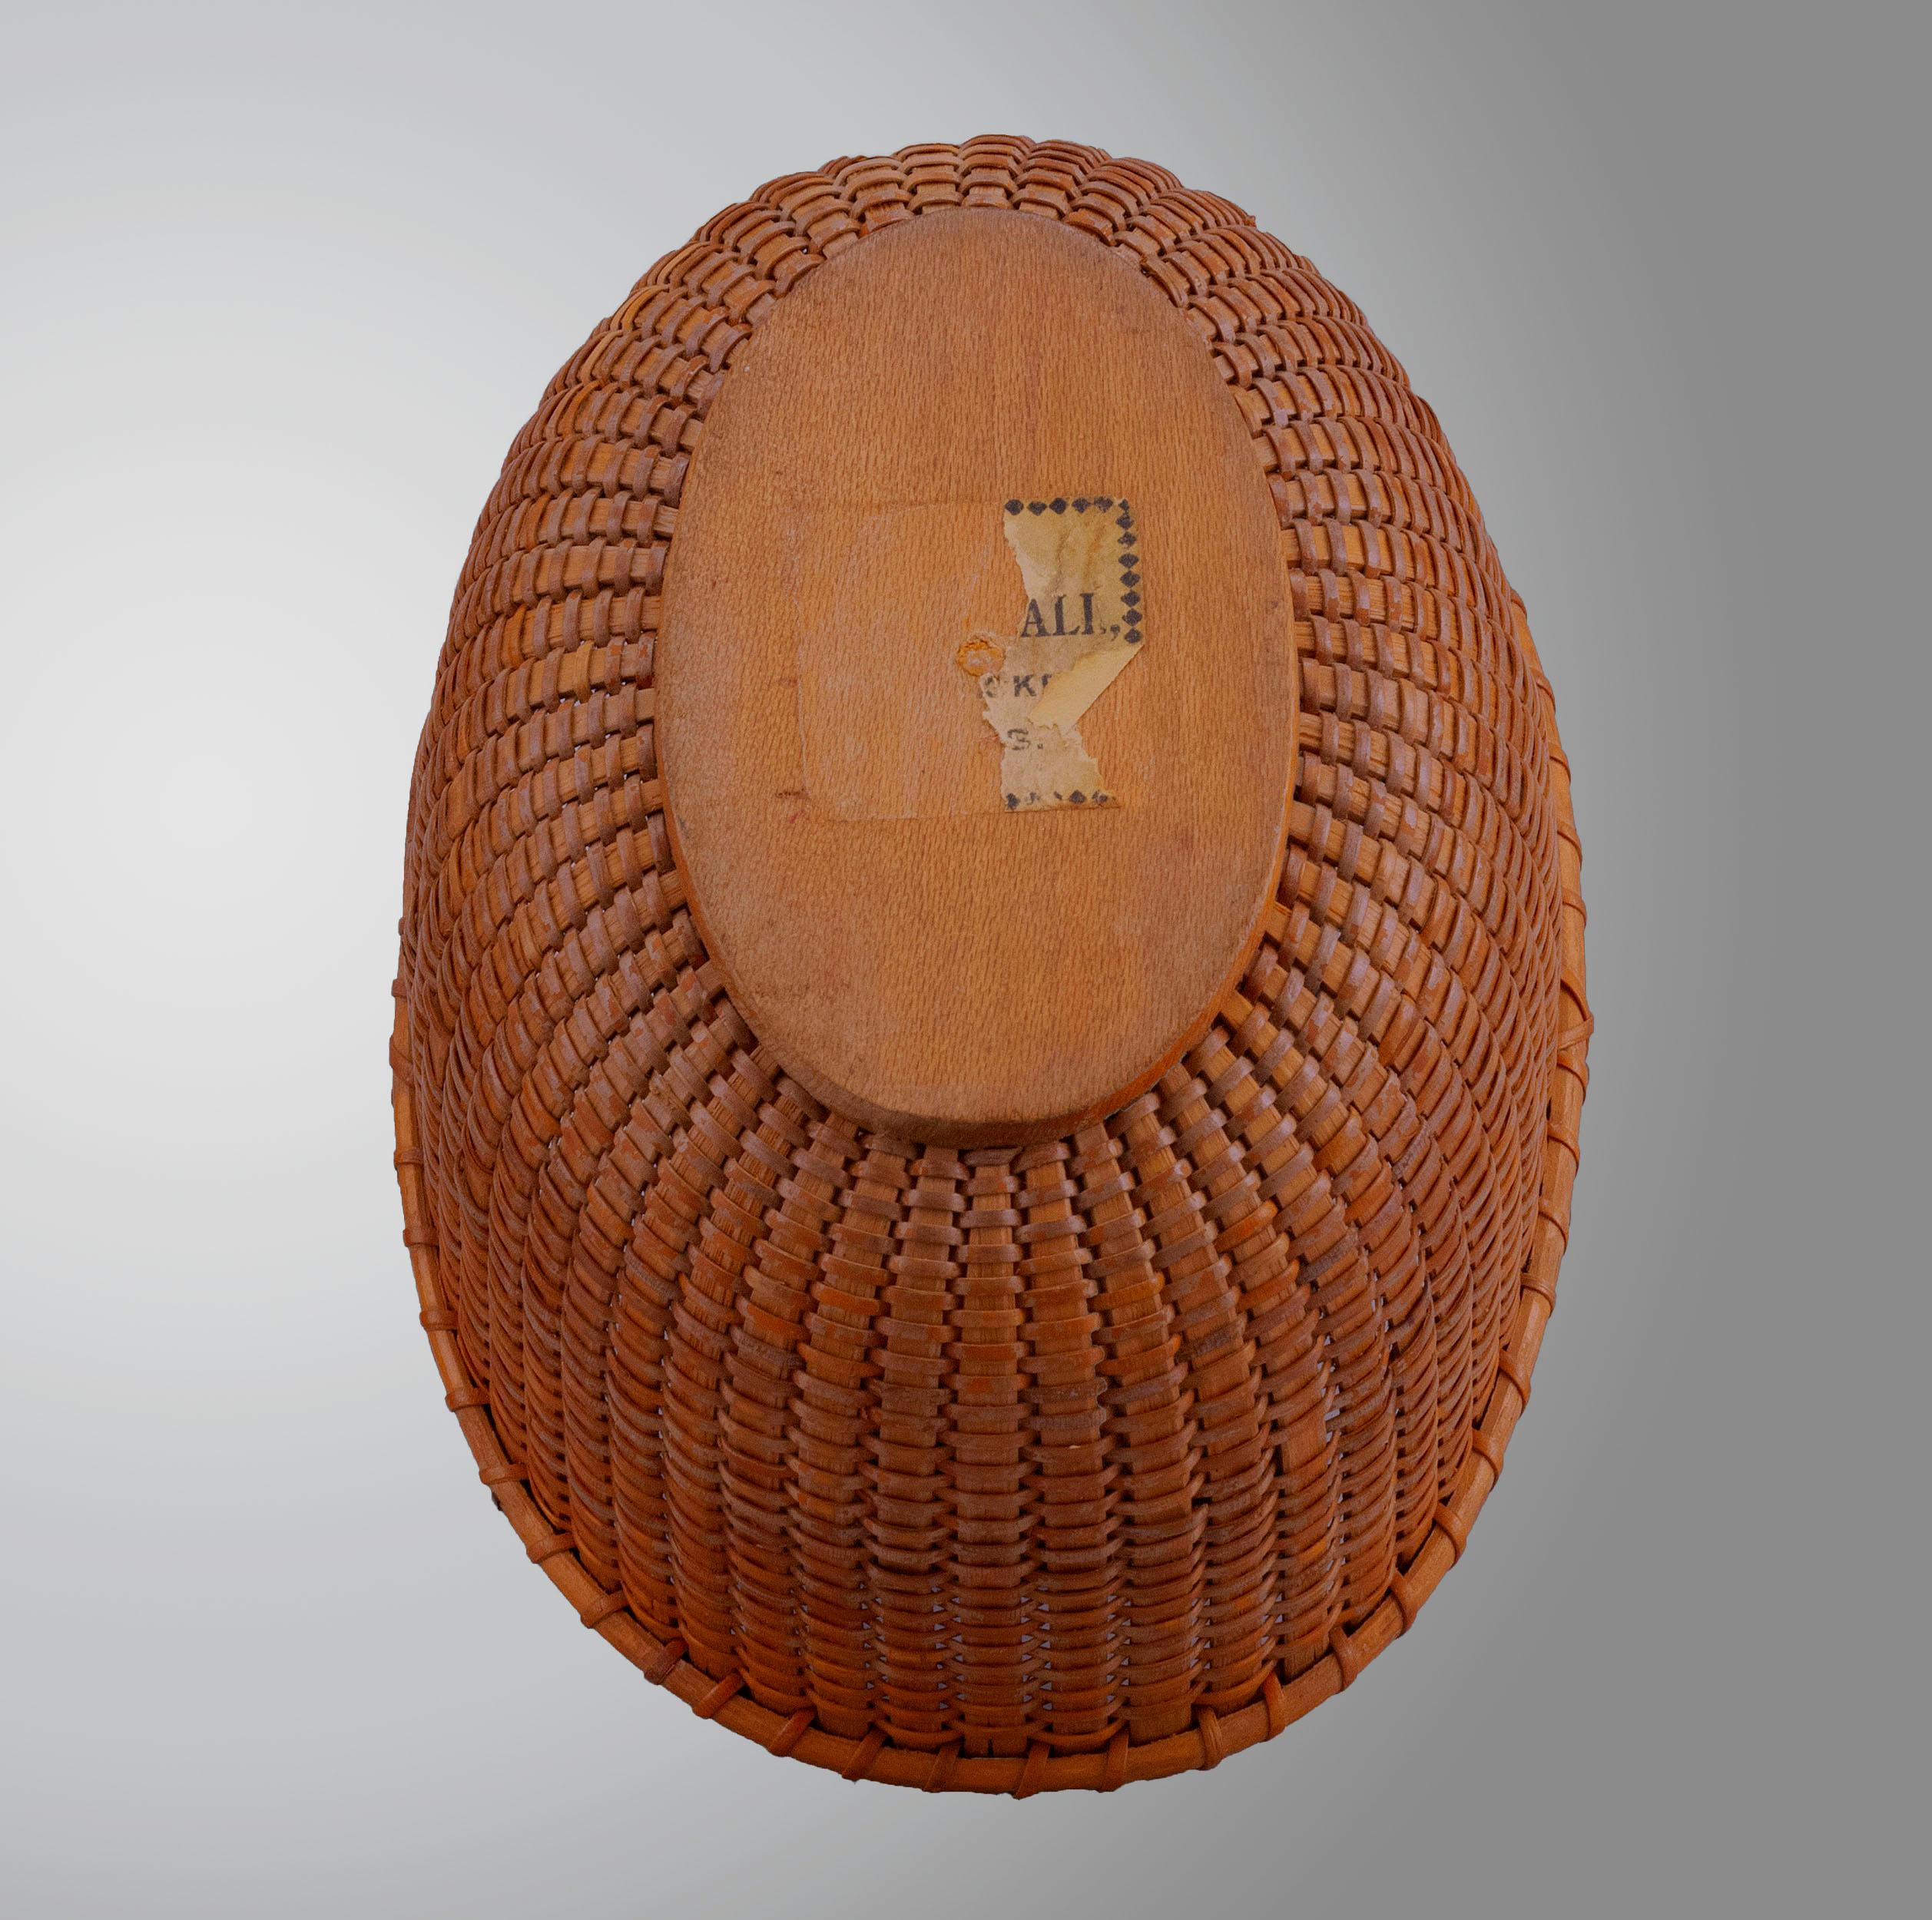 Folk Art Nantucket Lightship Basket, Made by Davis Hall on the South Shoal Lightship For Sale